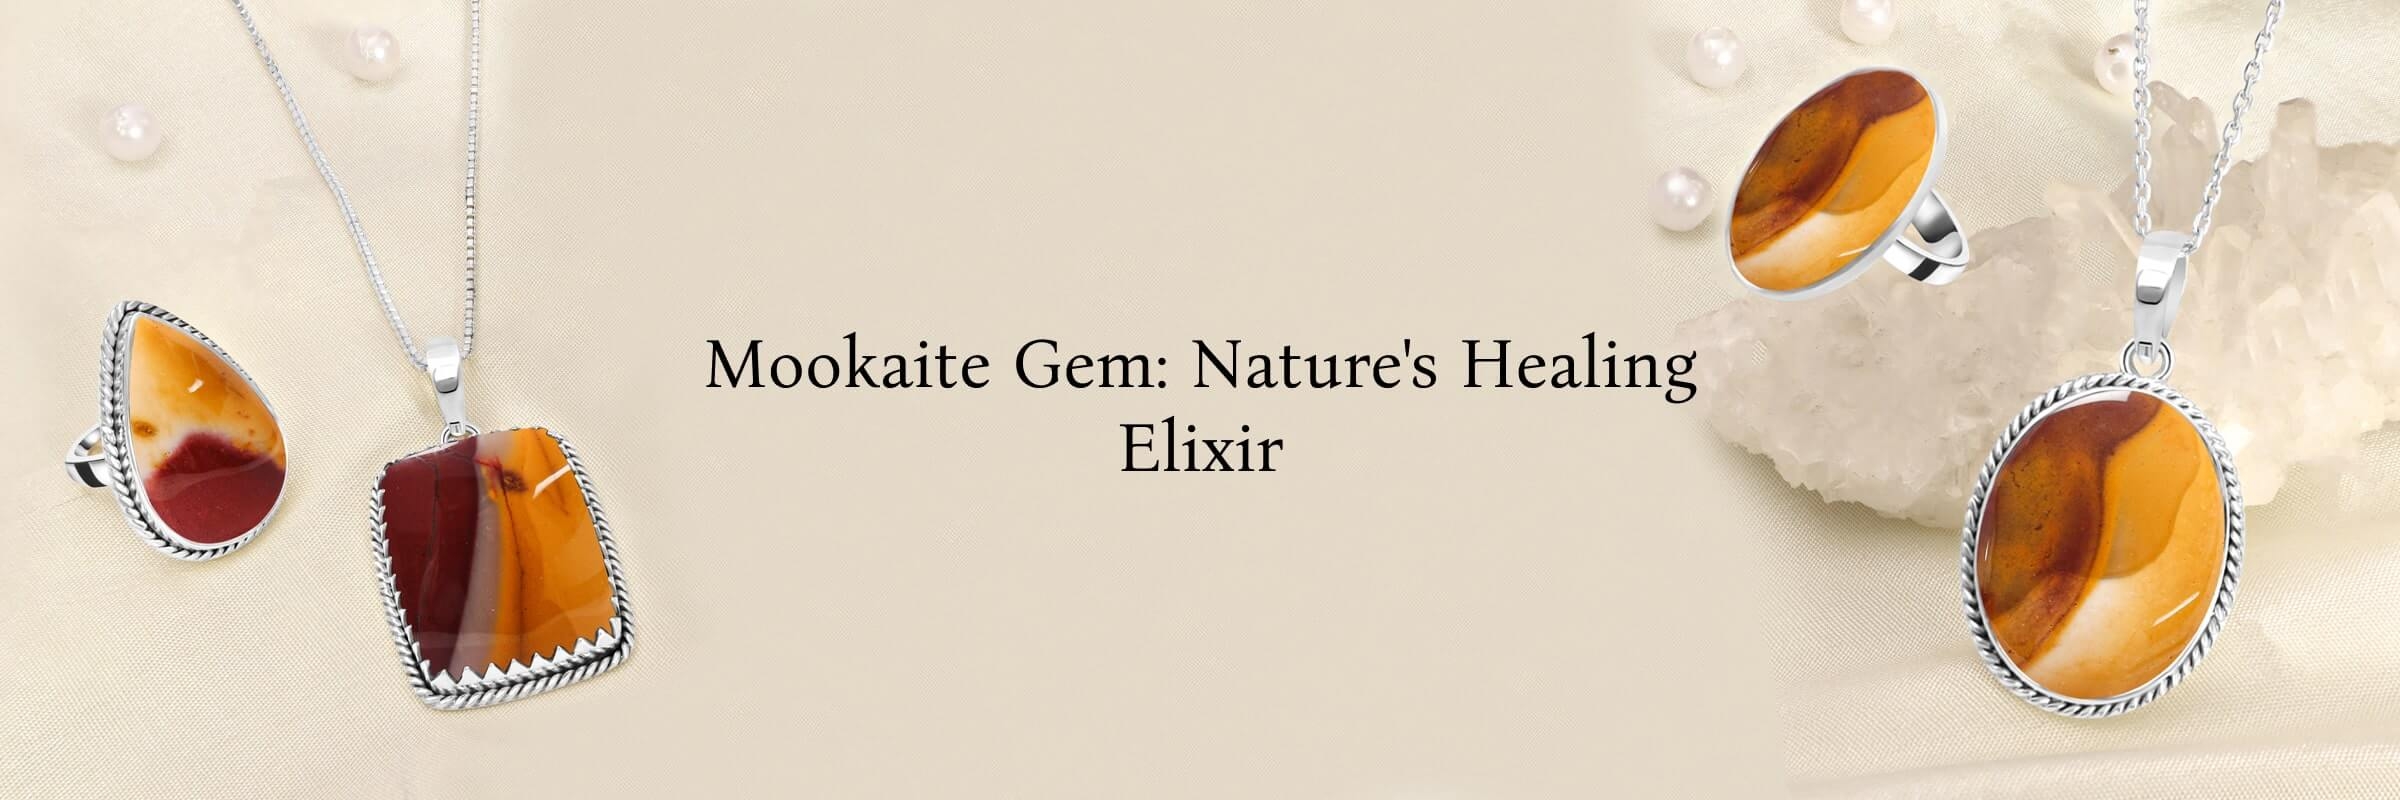 Healing Properties of Mookaite Gem